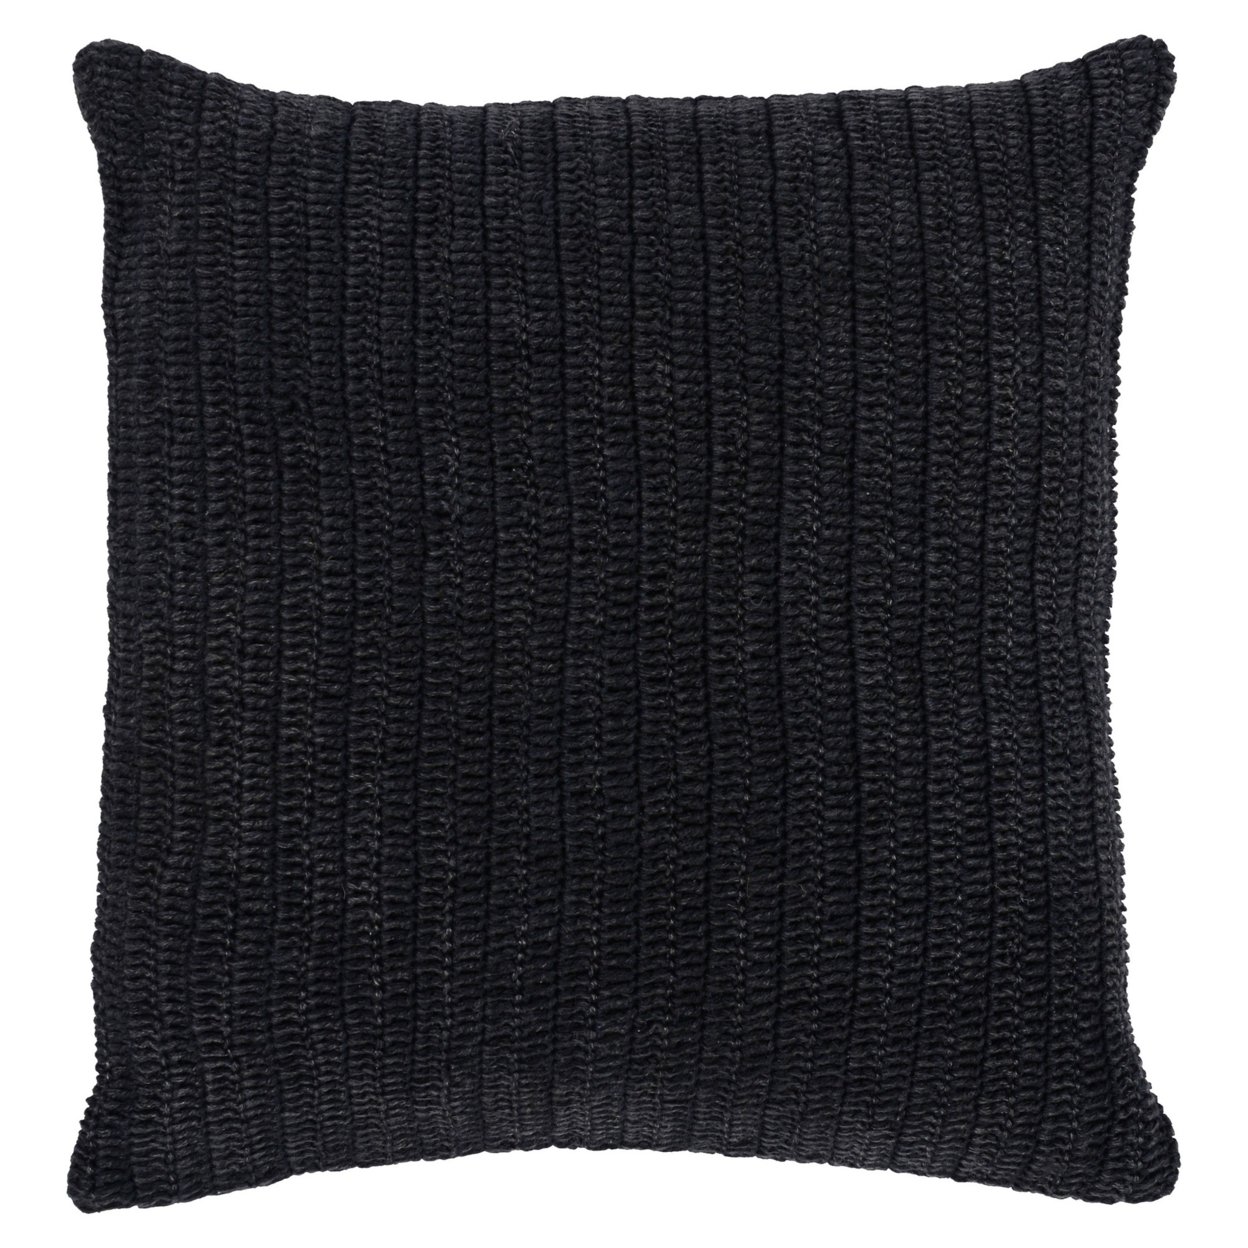 Rosie 22 Inch Square Accent Throw Pillow, Hand Knitted Designs, Black Linen- Saltoro Sherpi